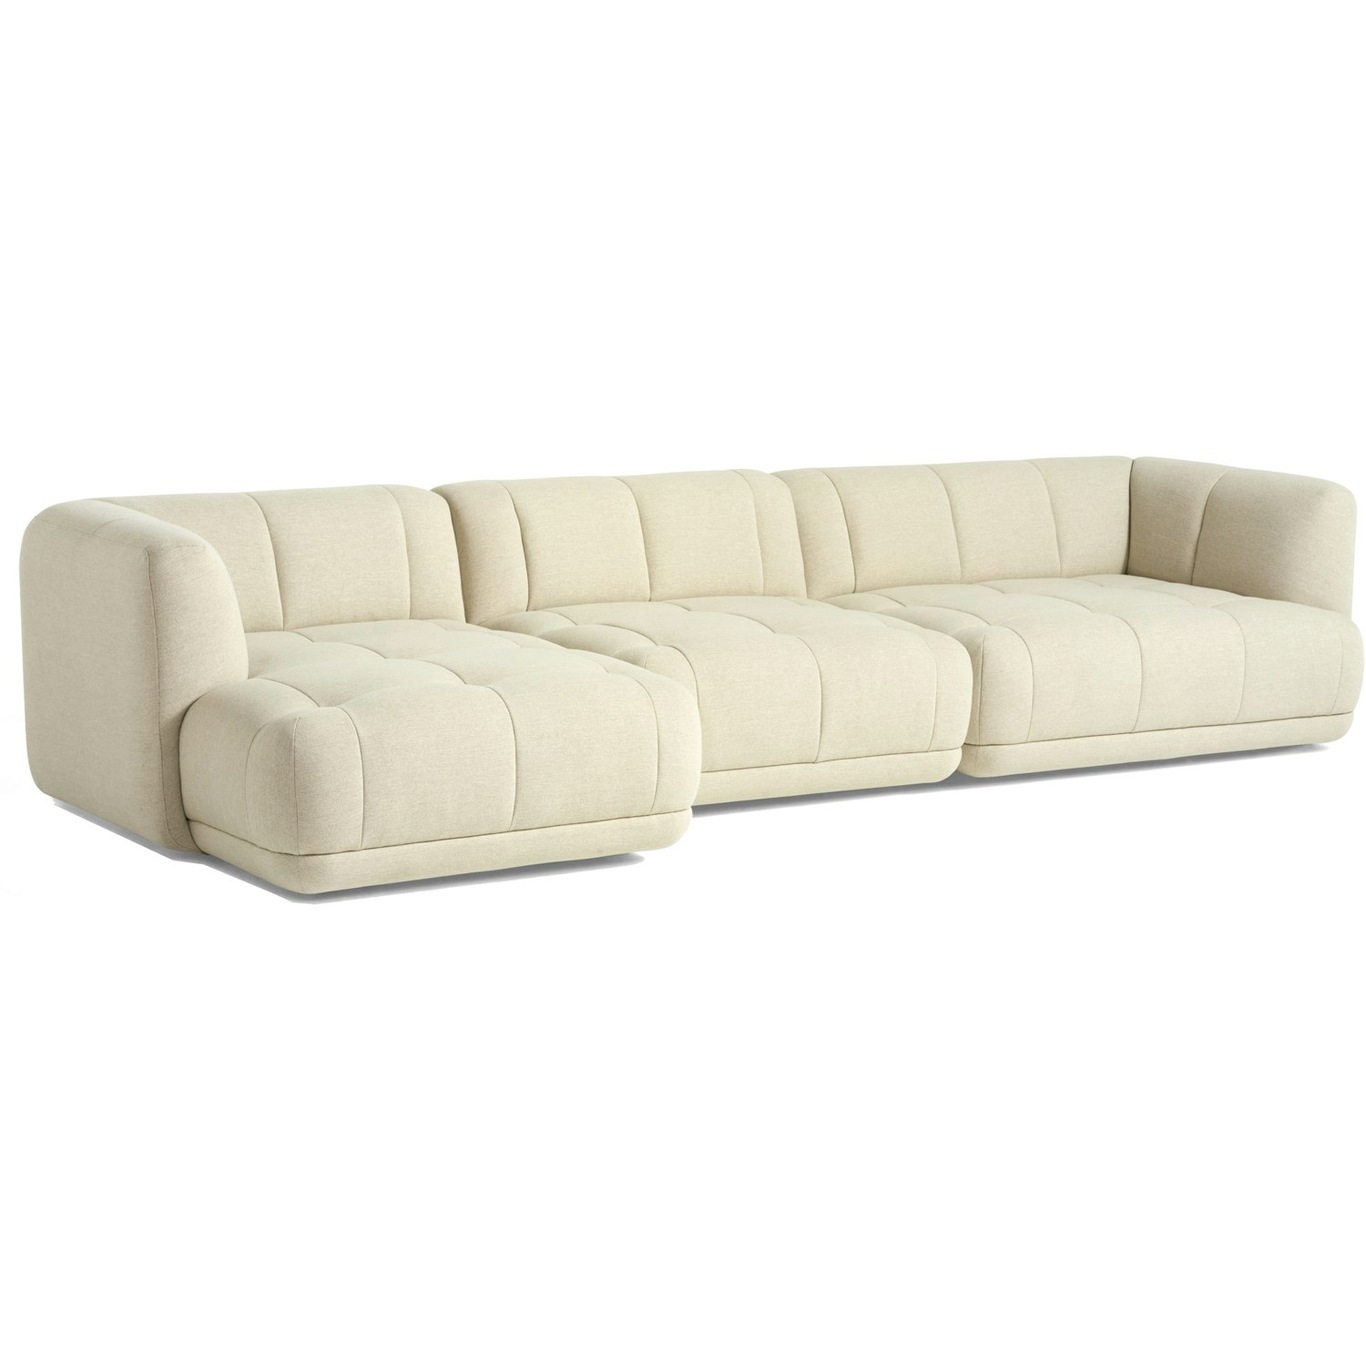 Quilton 4-Seater Sofa Configuration 17 Left, Mode 014